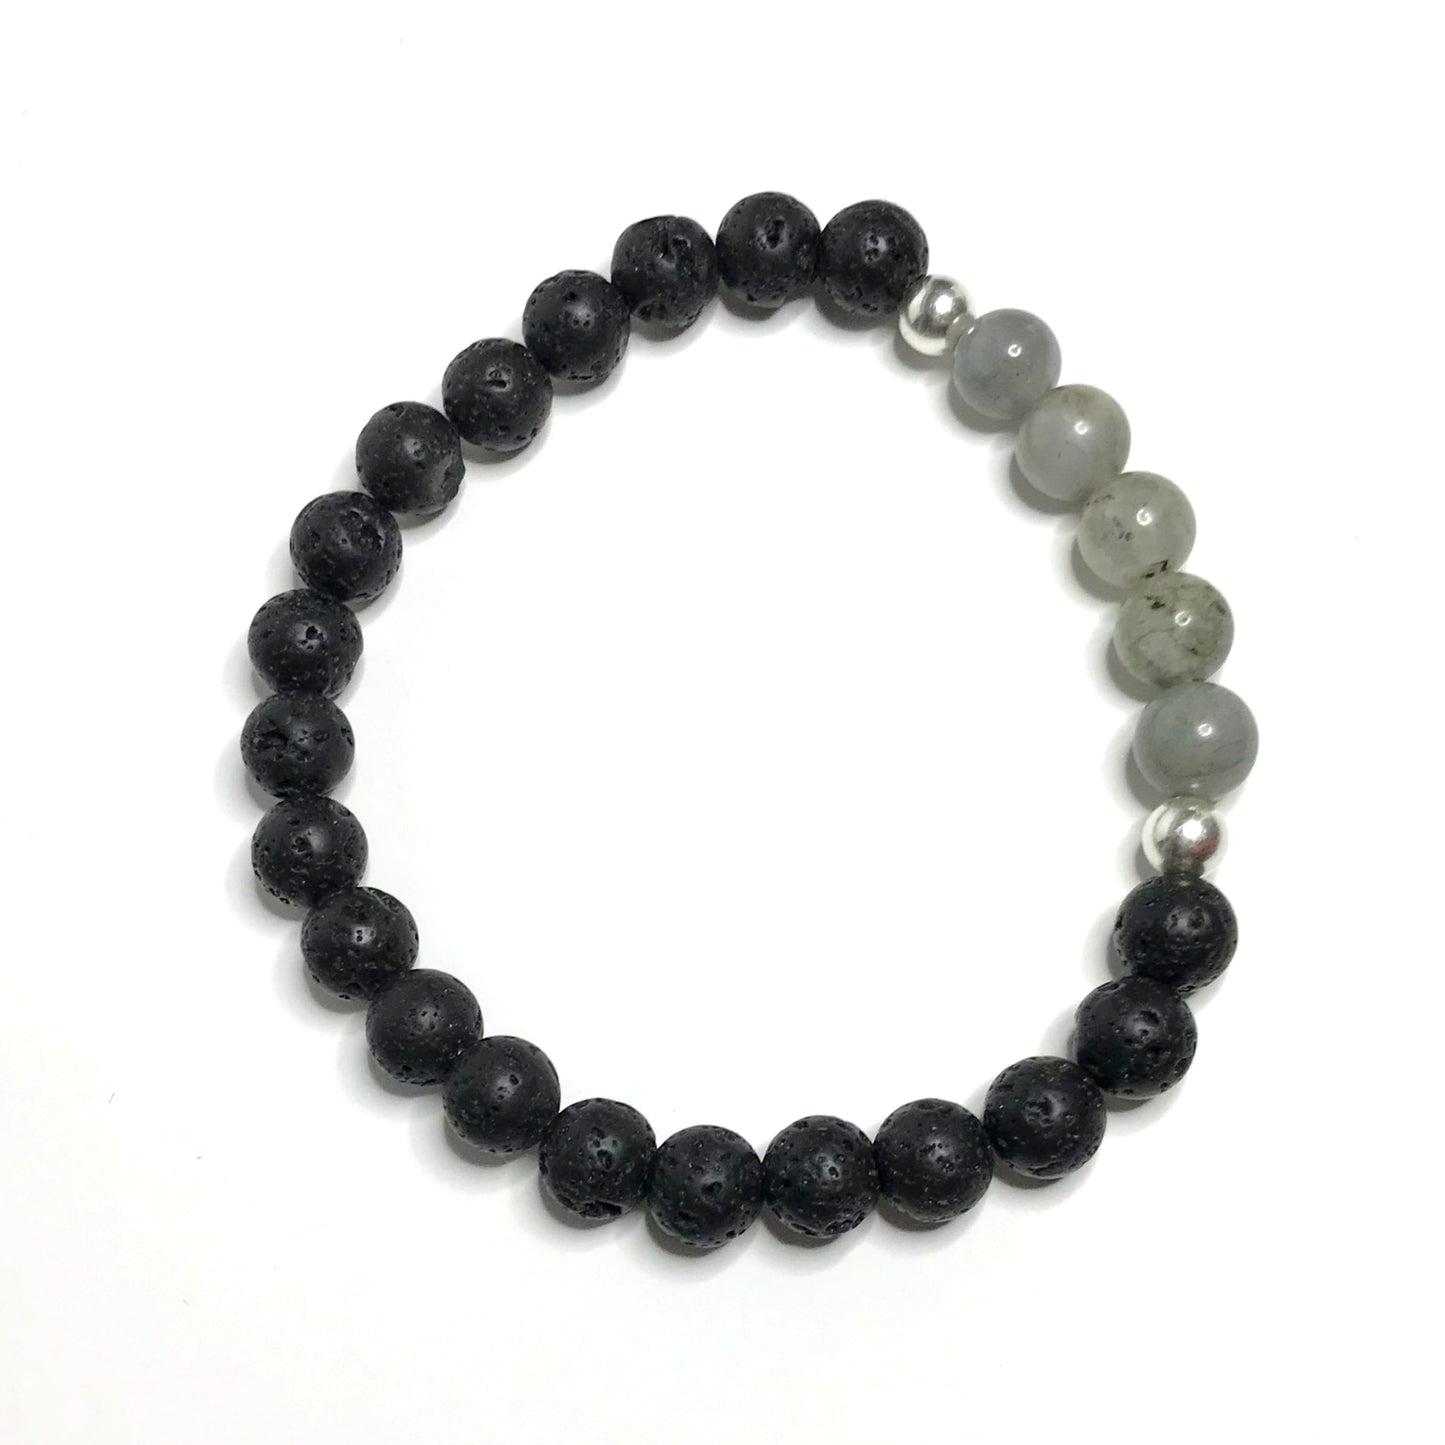 Labradorite bracelet with lava rock beads